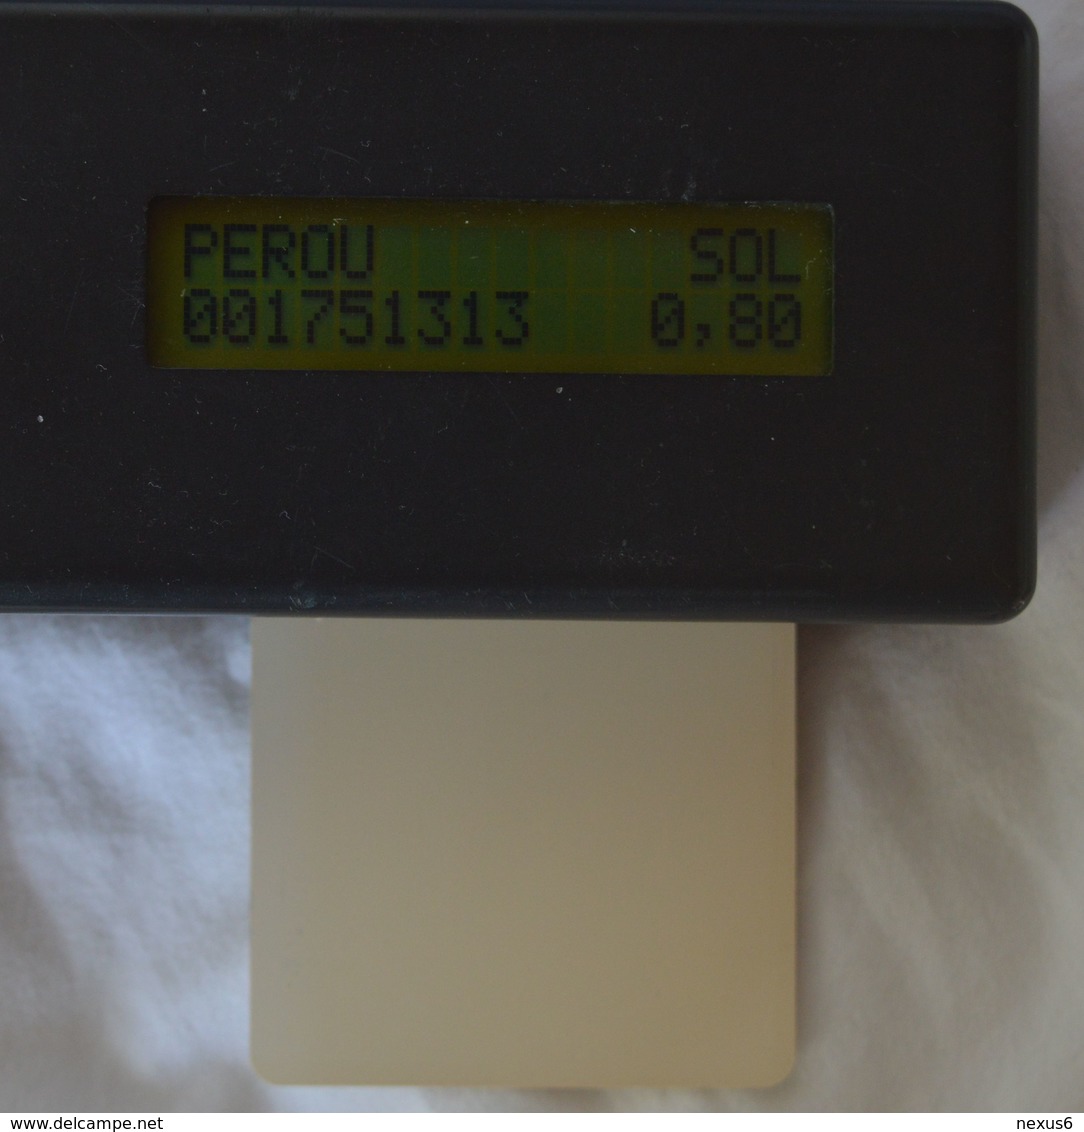 Peru - Telepoint White Prueba Test Card 10Sol, Used (check Photos!) - Peru